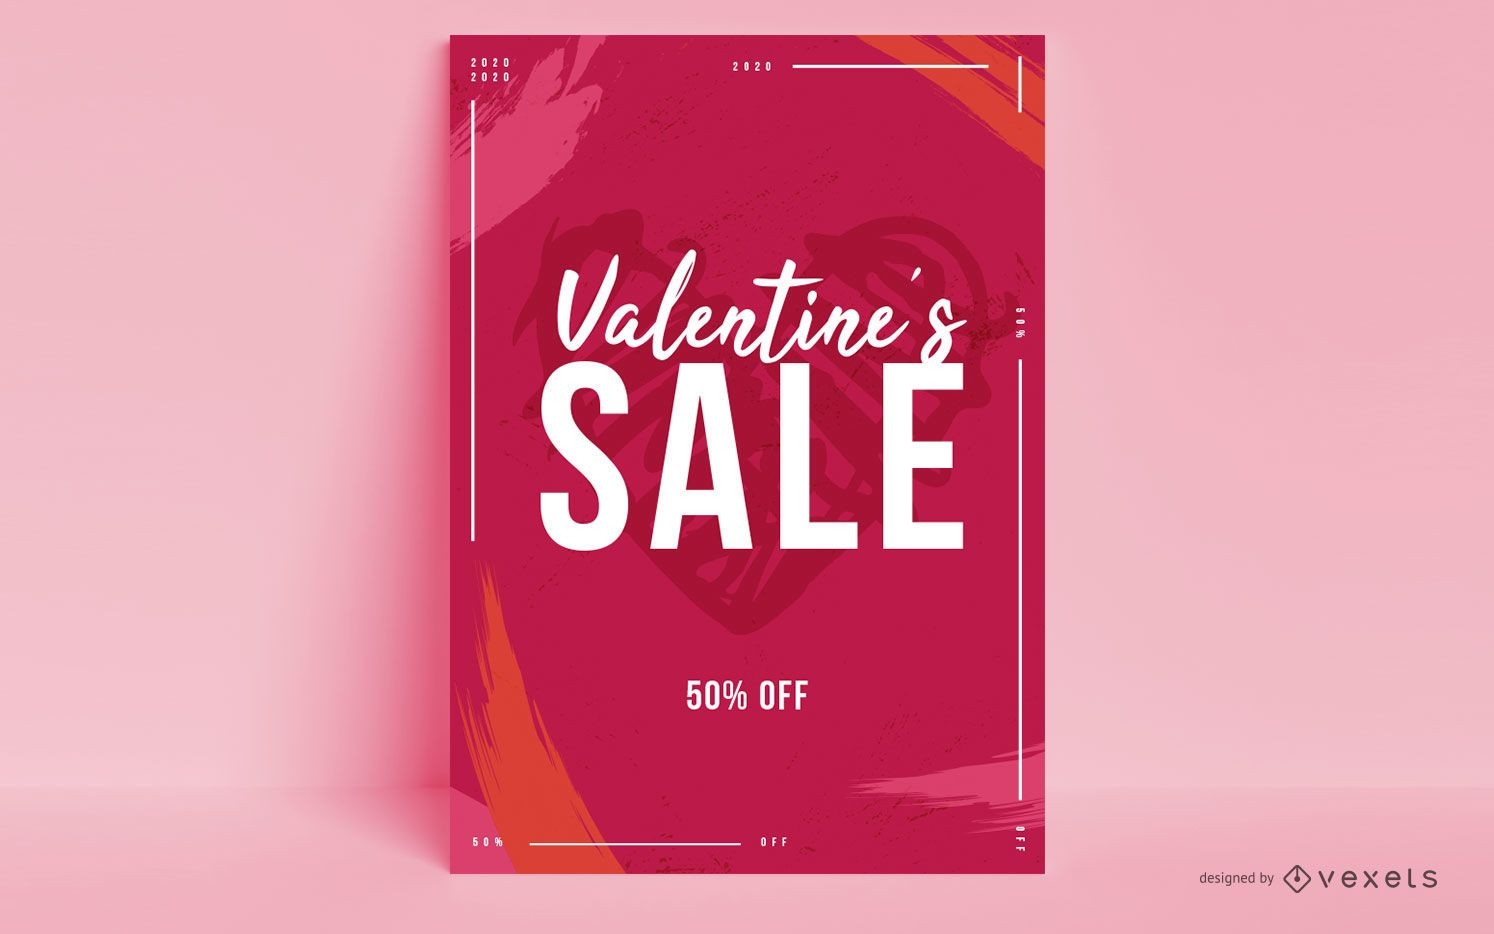 Valentine's Day paint brush heart Sale poster design